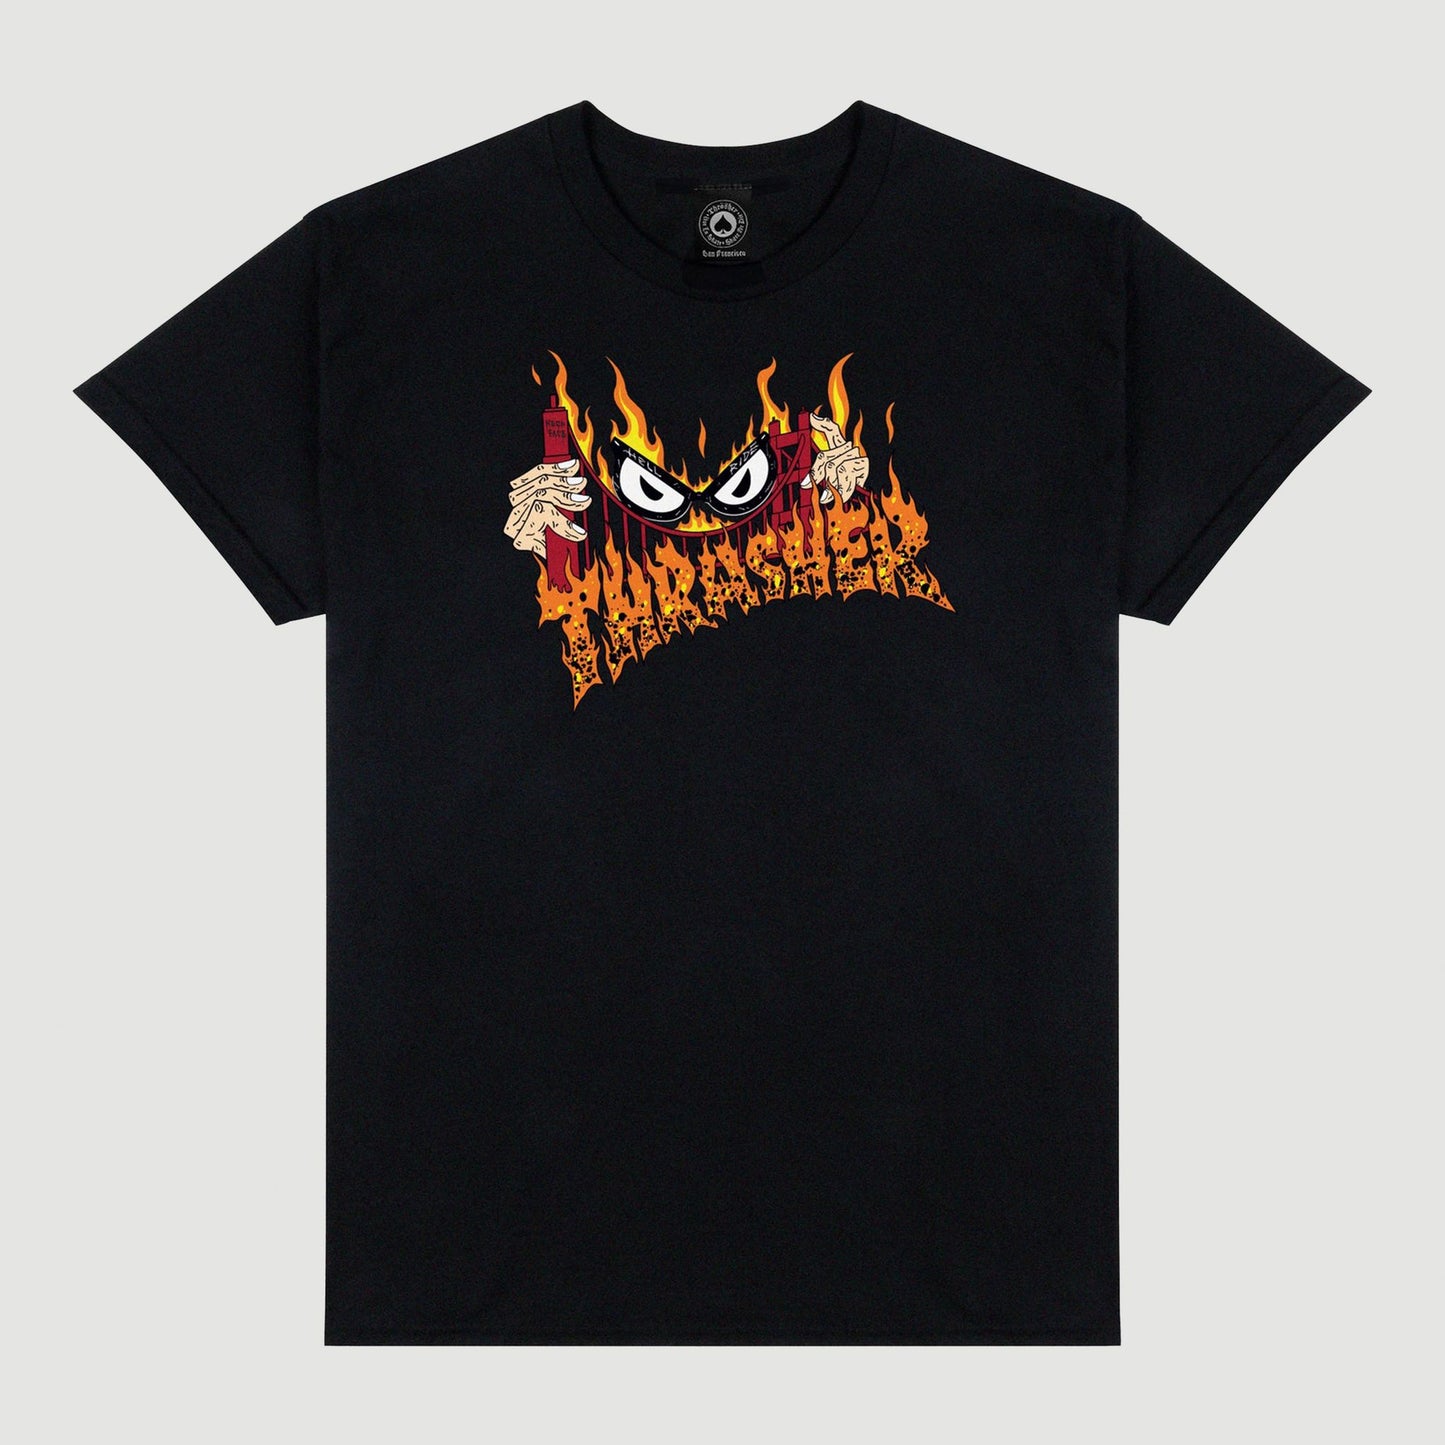 Thrasher Sucka Free by Neckface T-Shirt Black